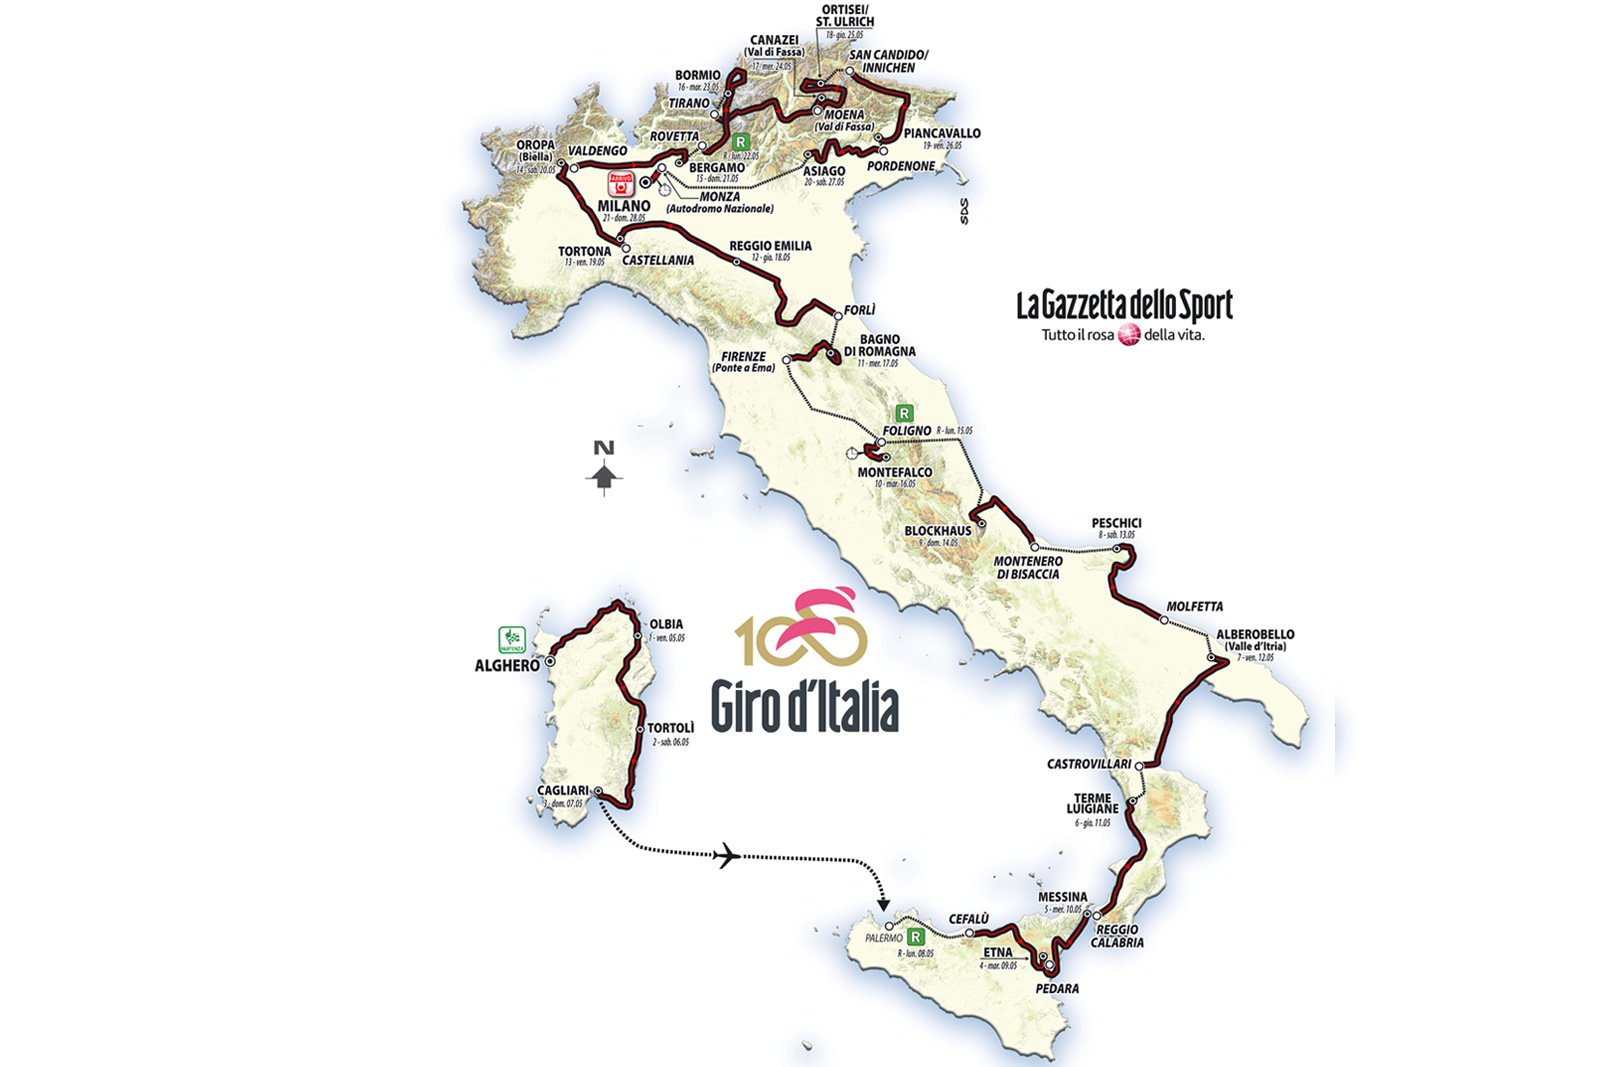 2017 Giro d’Italia Route Map